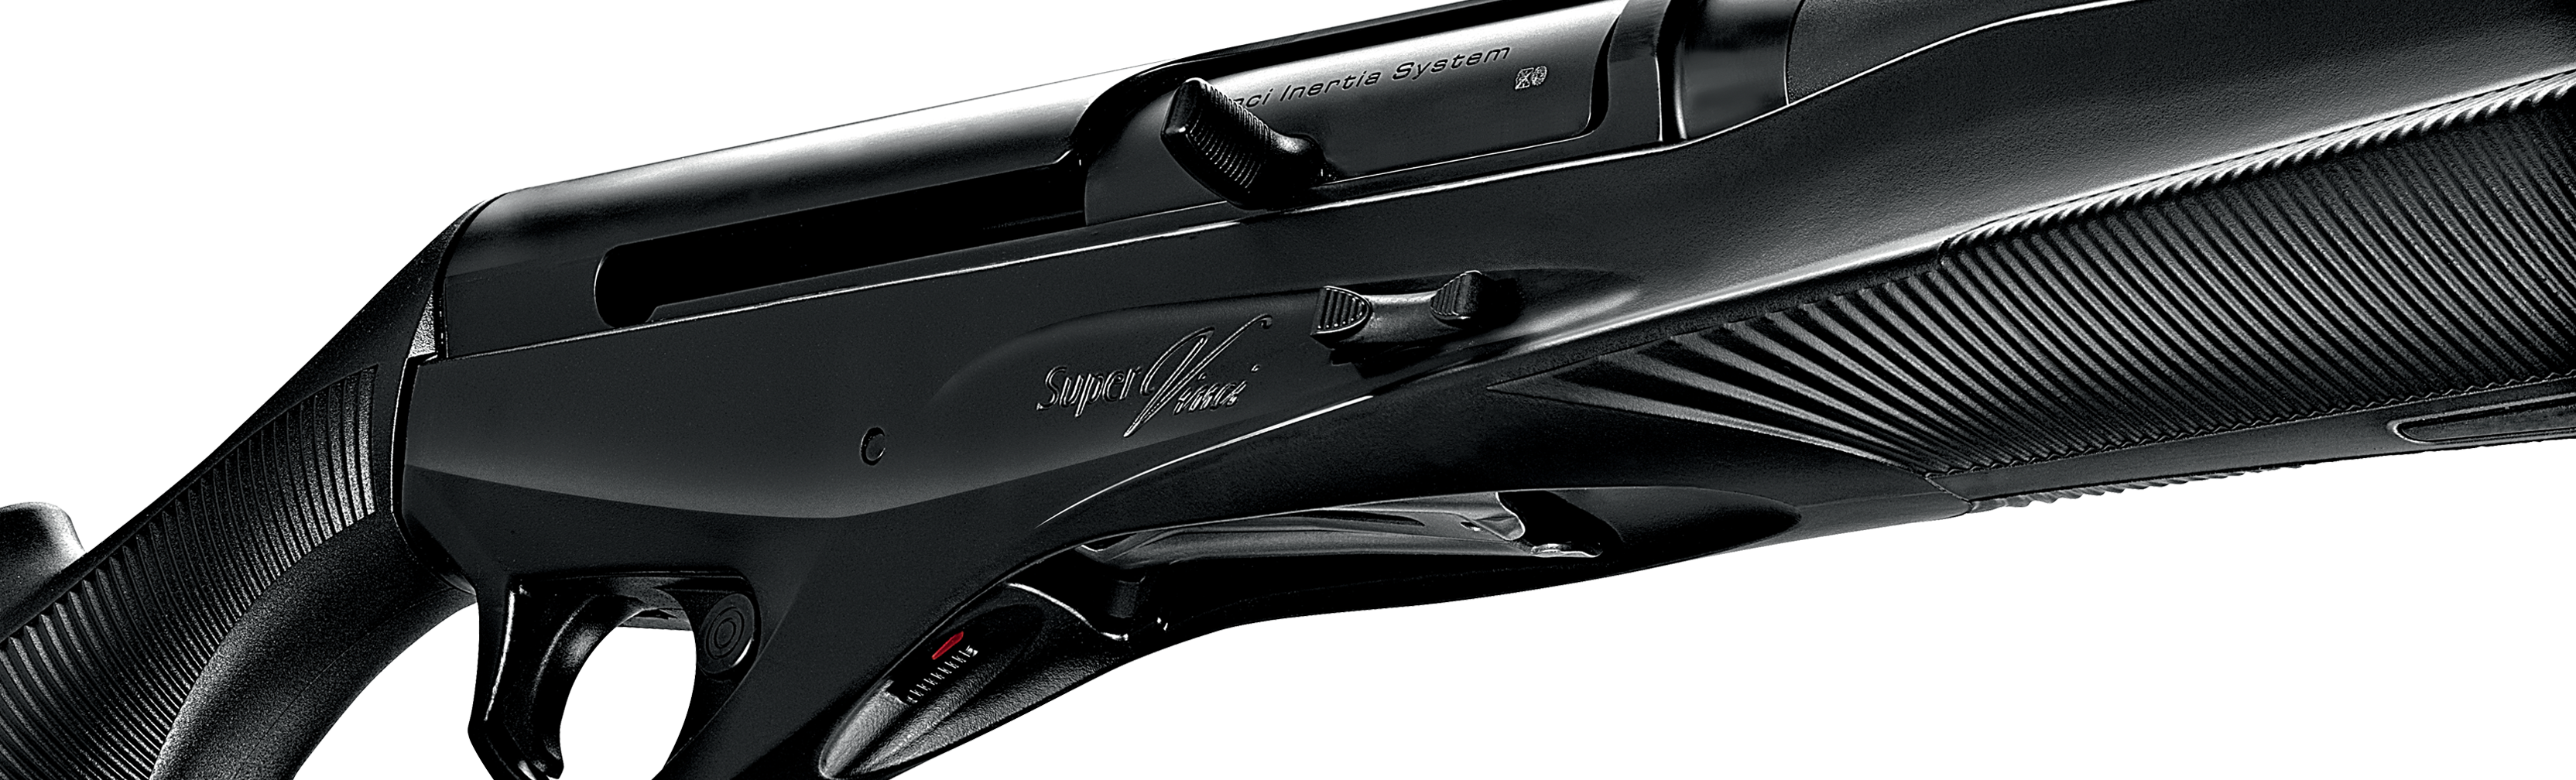 Super Vinci Black Semi-automatic Shotgun 